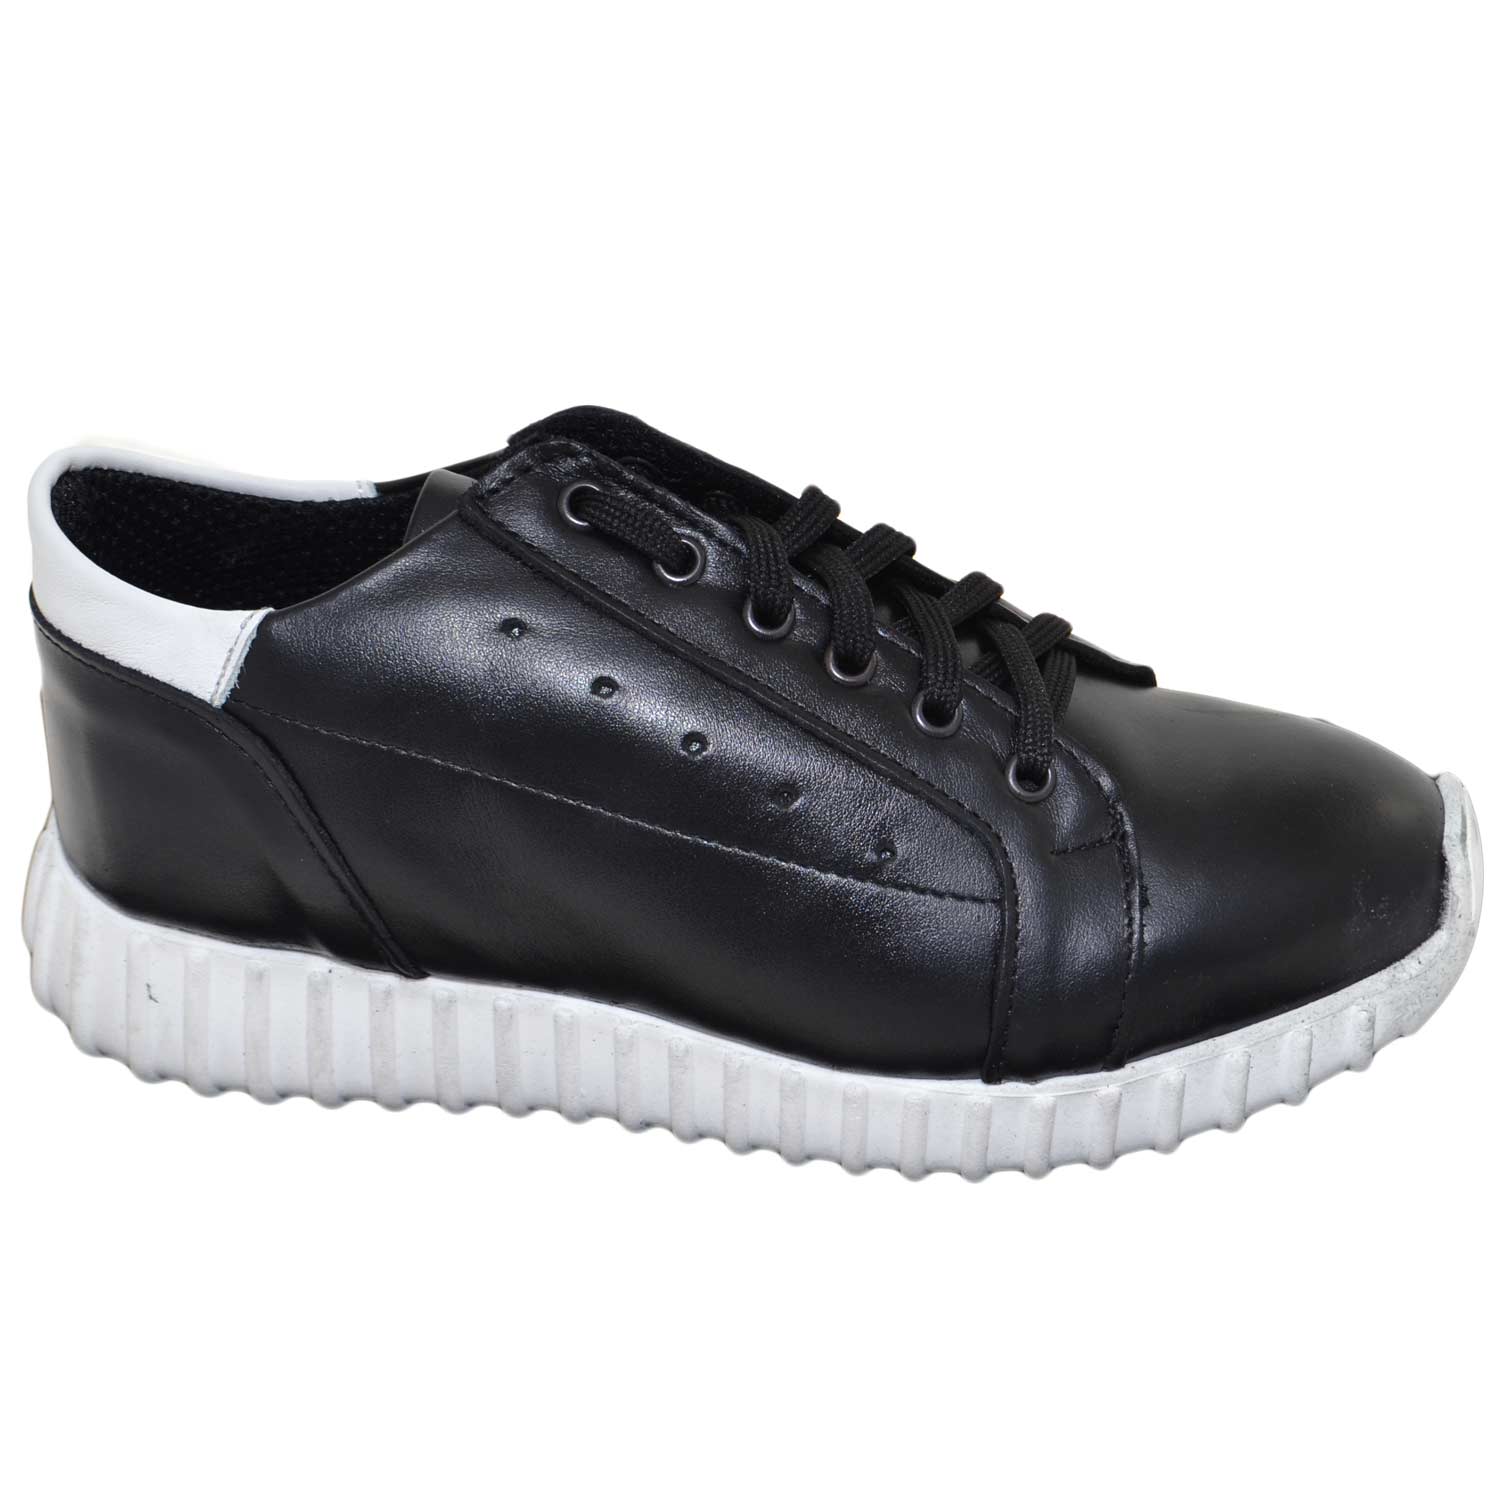 Sneakers alta uomo art.662 nera made in italy vera pelle fondo running comfort rifinimenti in bianco